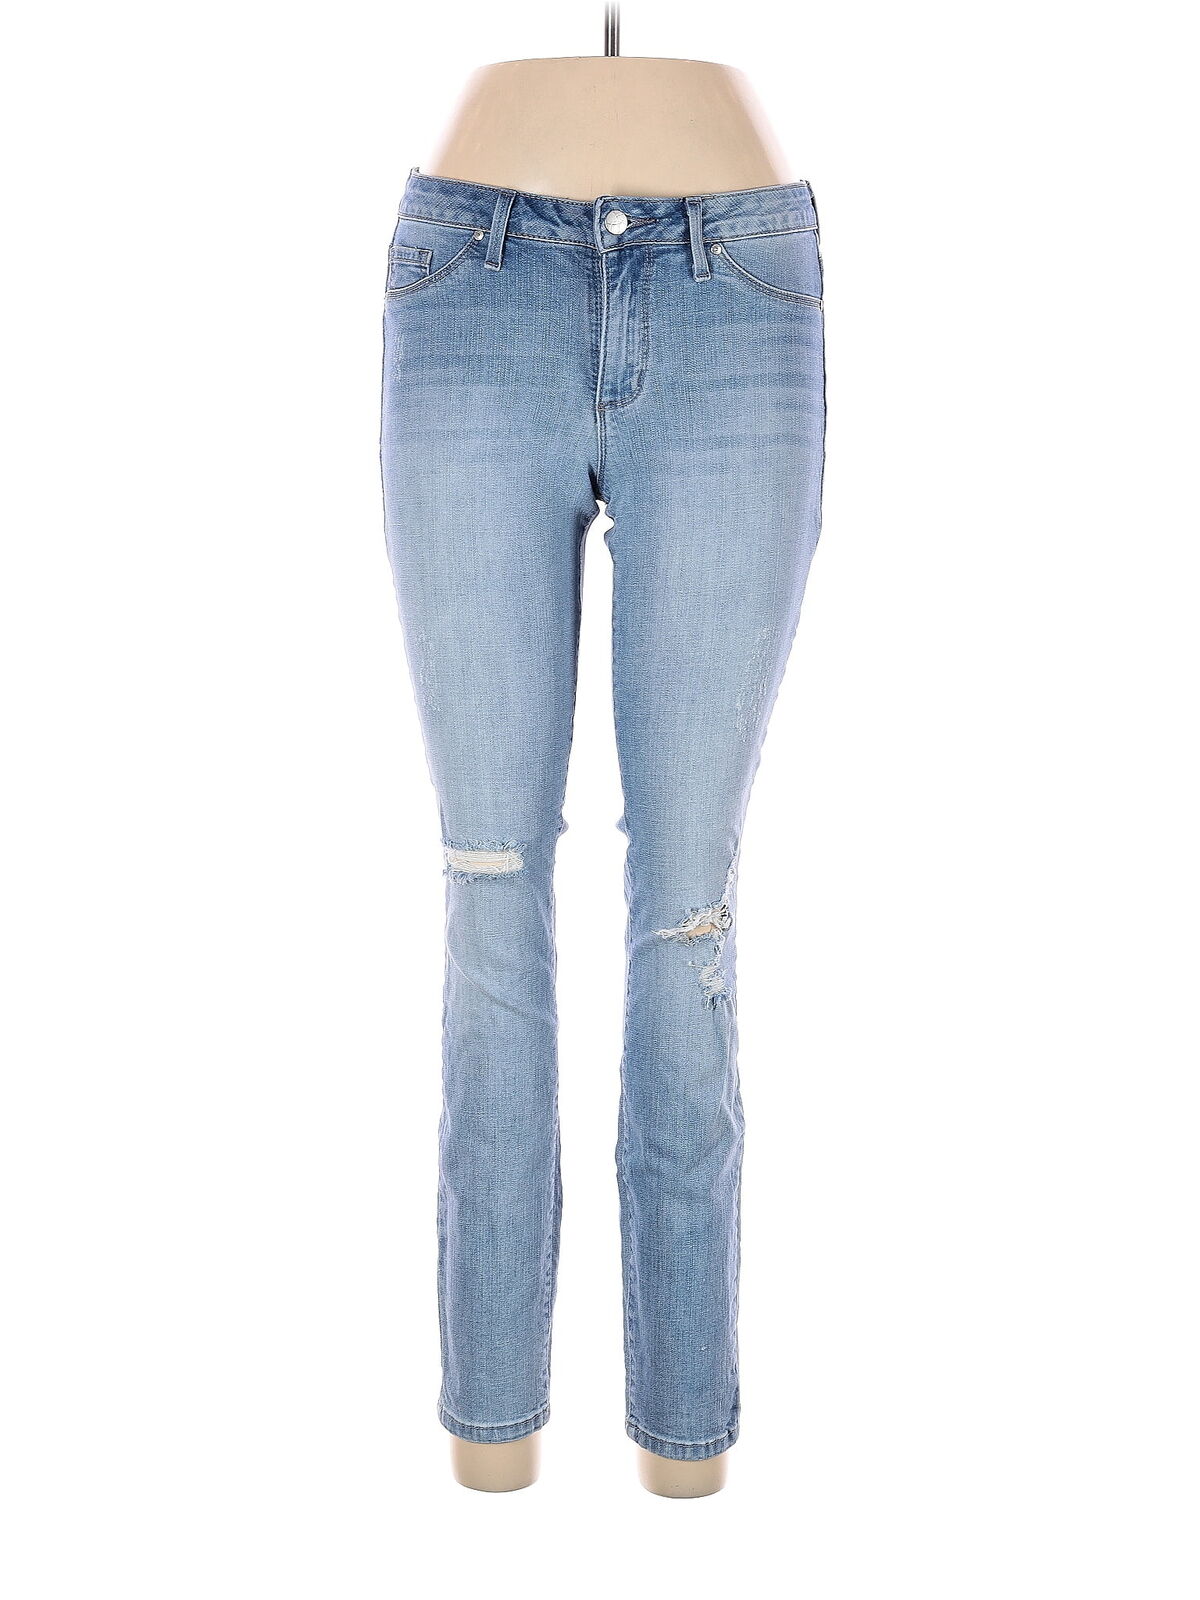 Jessica Simpson Women Blue Jeans 29W - image 1